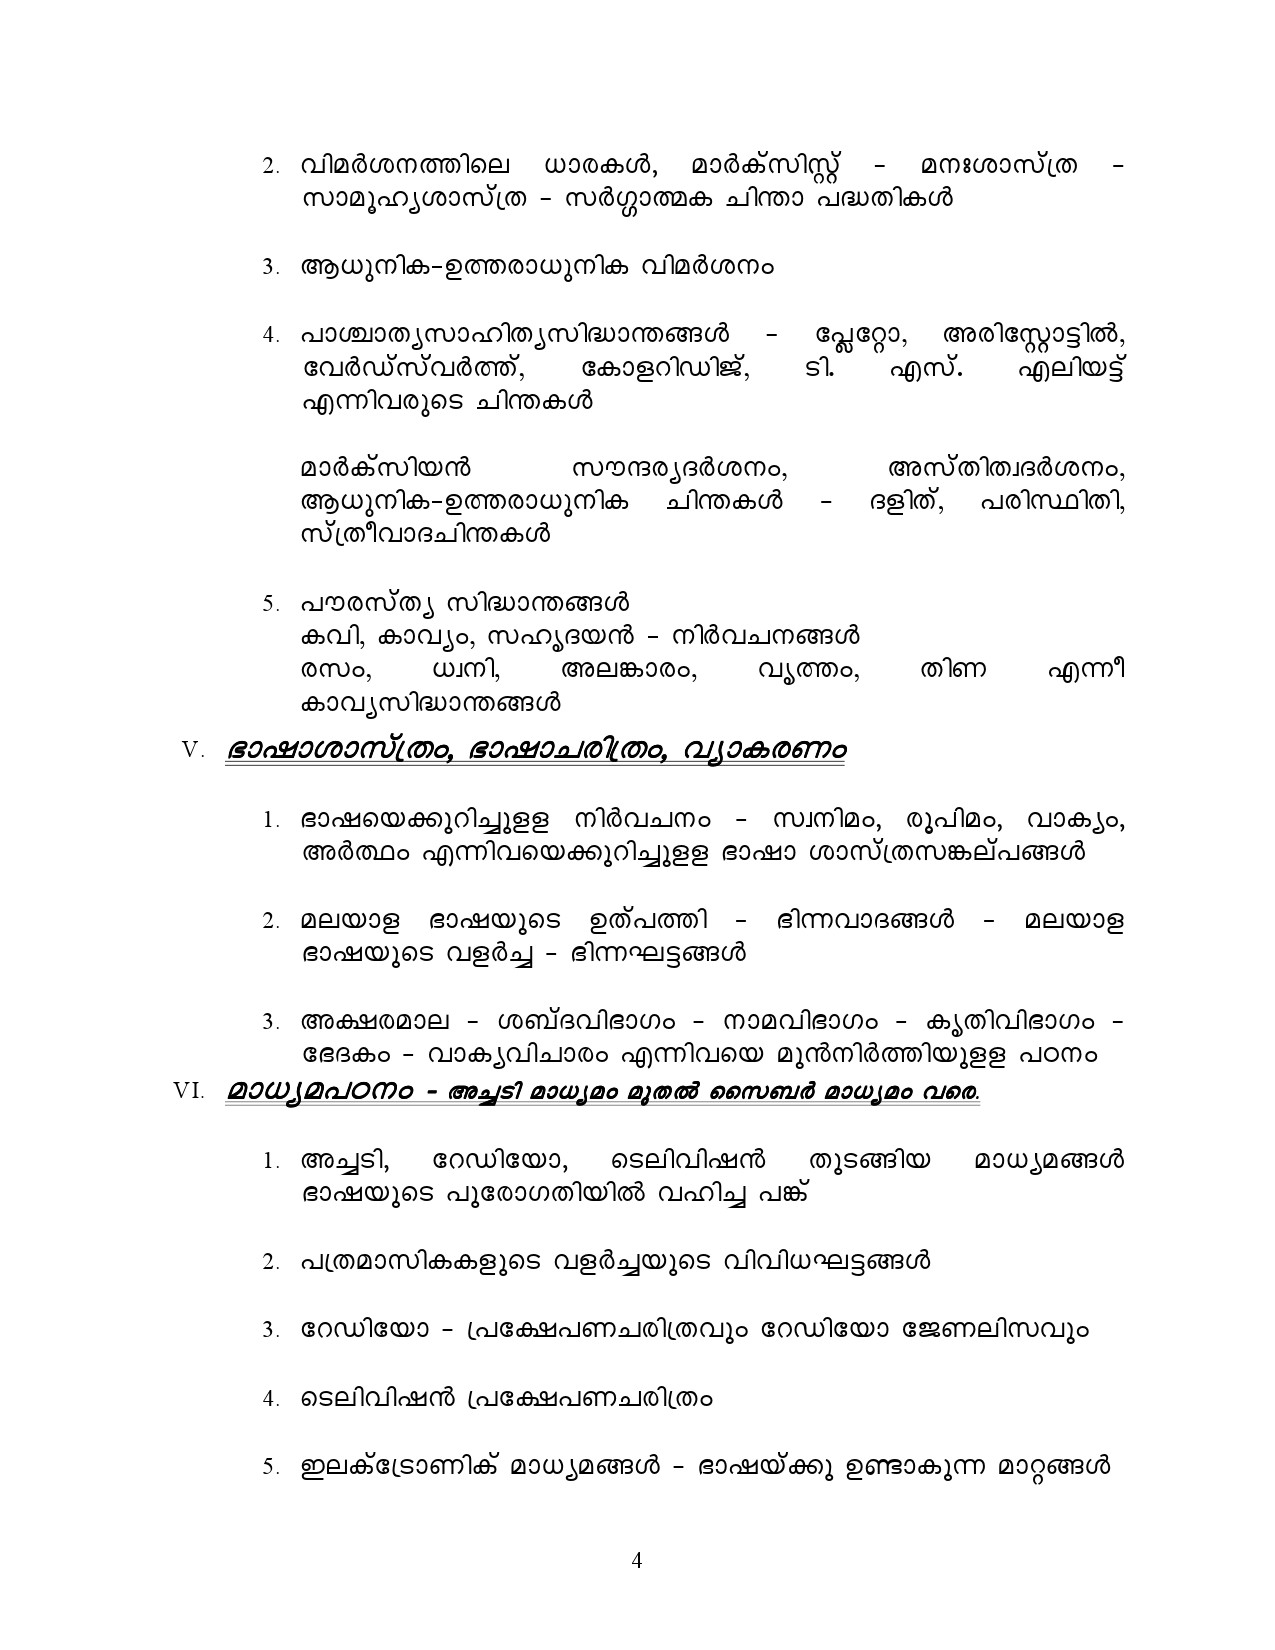 High School Assistant Malayalam Part A Kerala Examination Syllabus 2021 - Notification Image 4